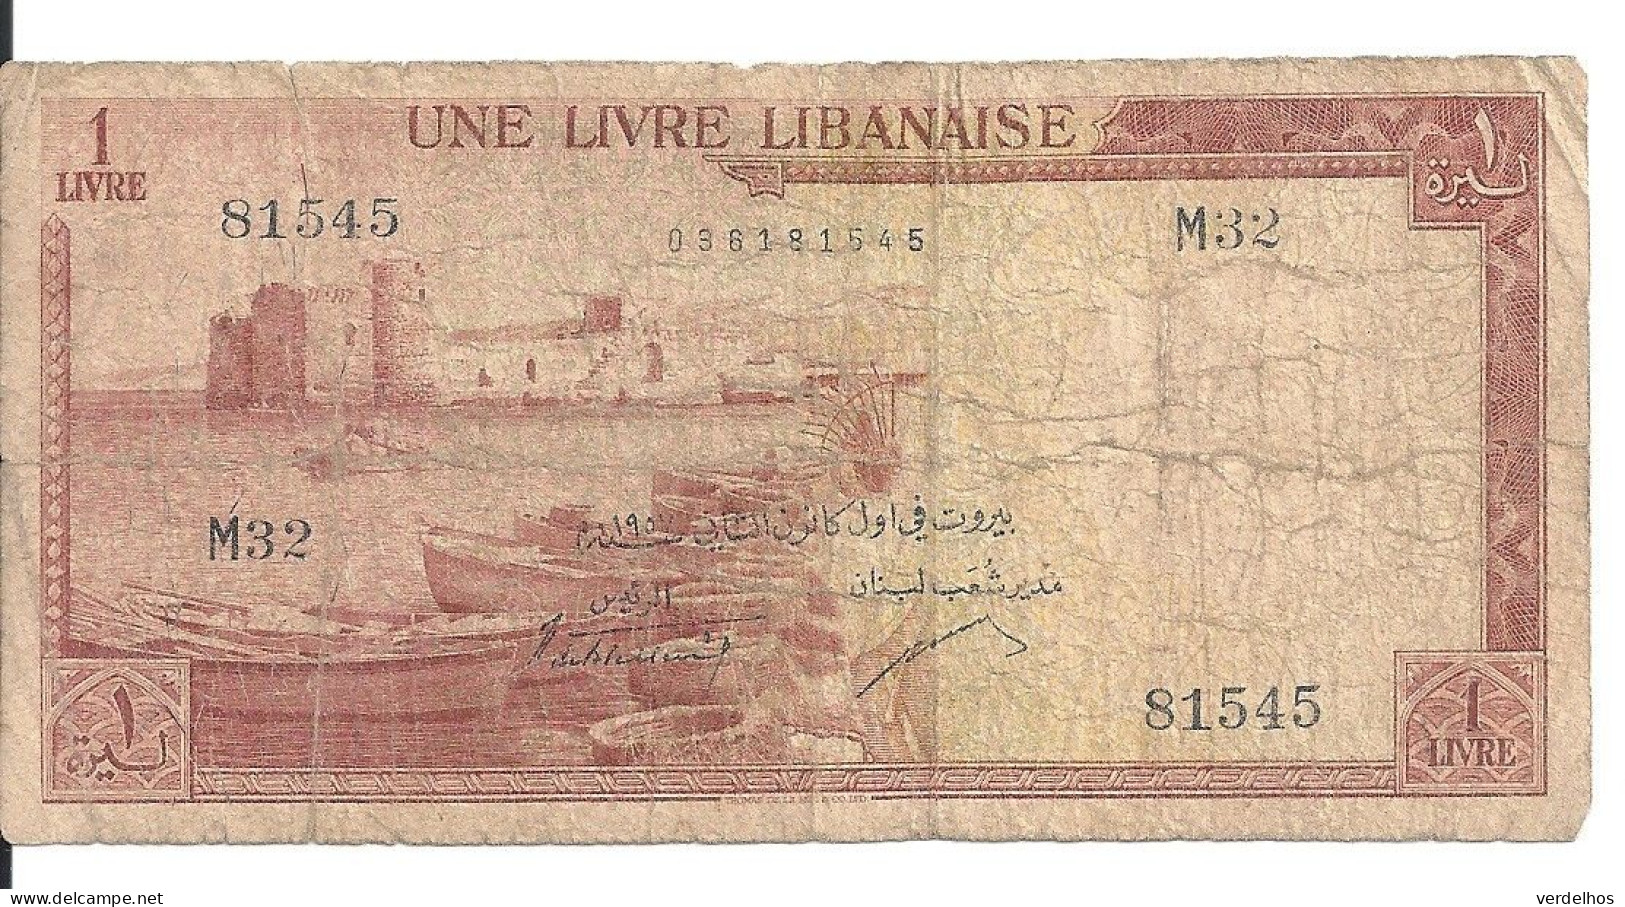 LIBAN 1 LIVRE 1957 VG+ P 55 B - Lebanon